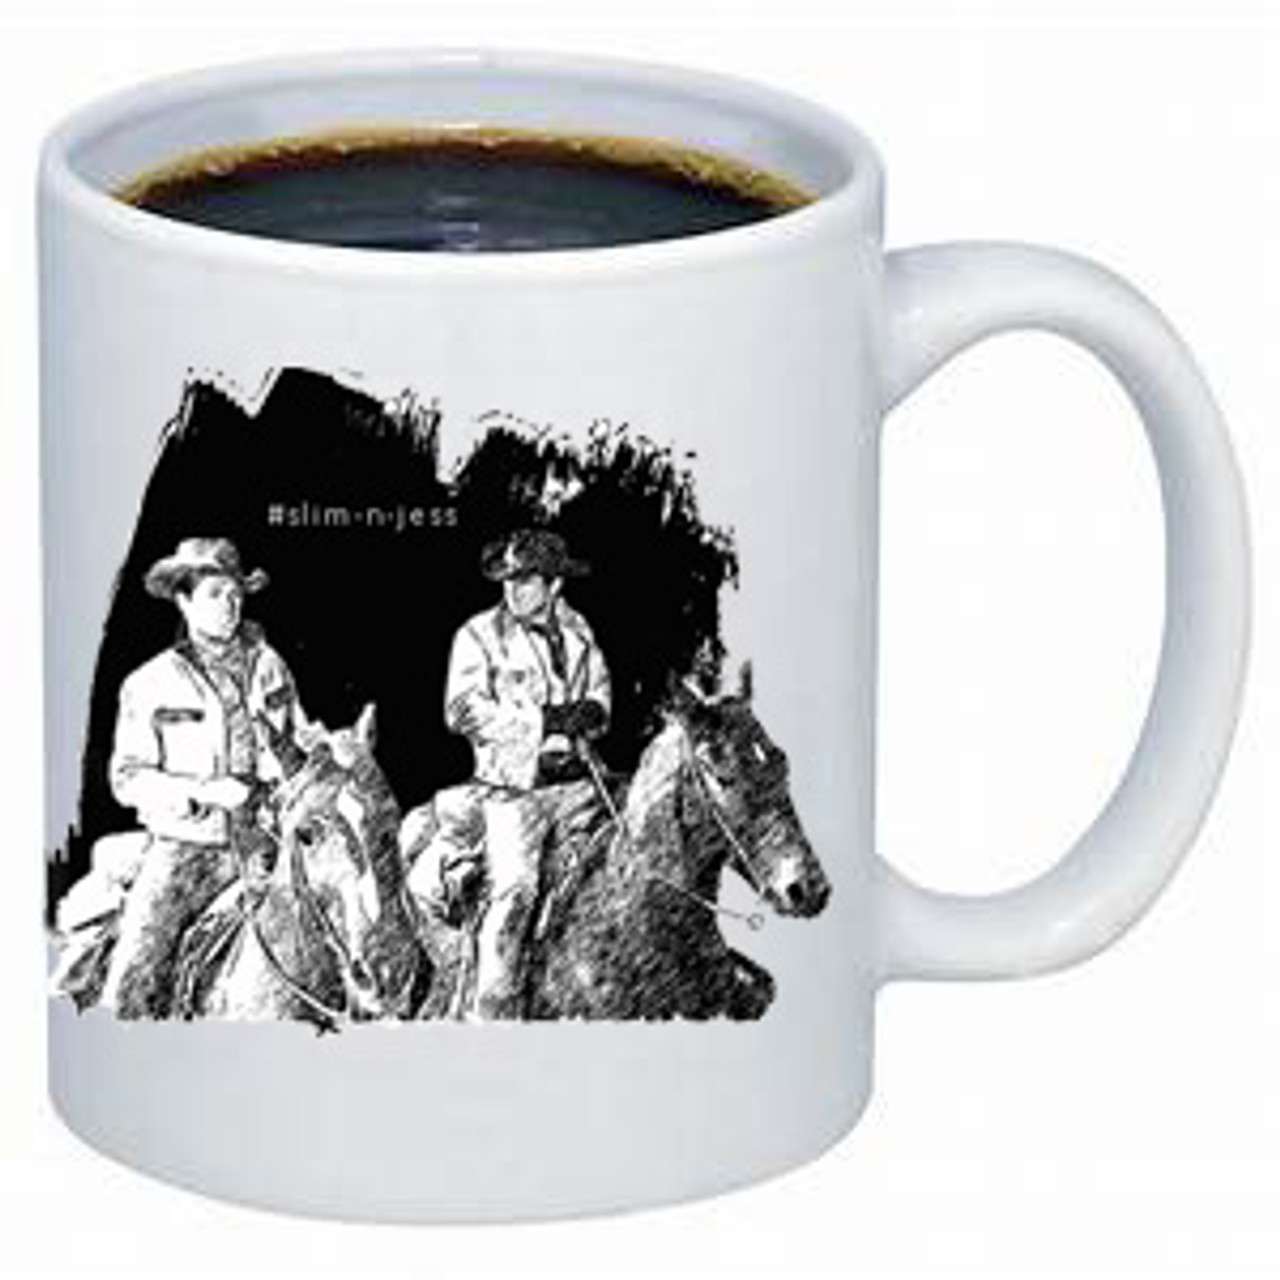 Robert Fuller Coffee Mug - #slim-n-jess